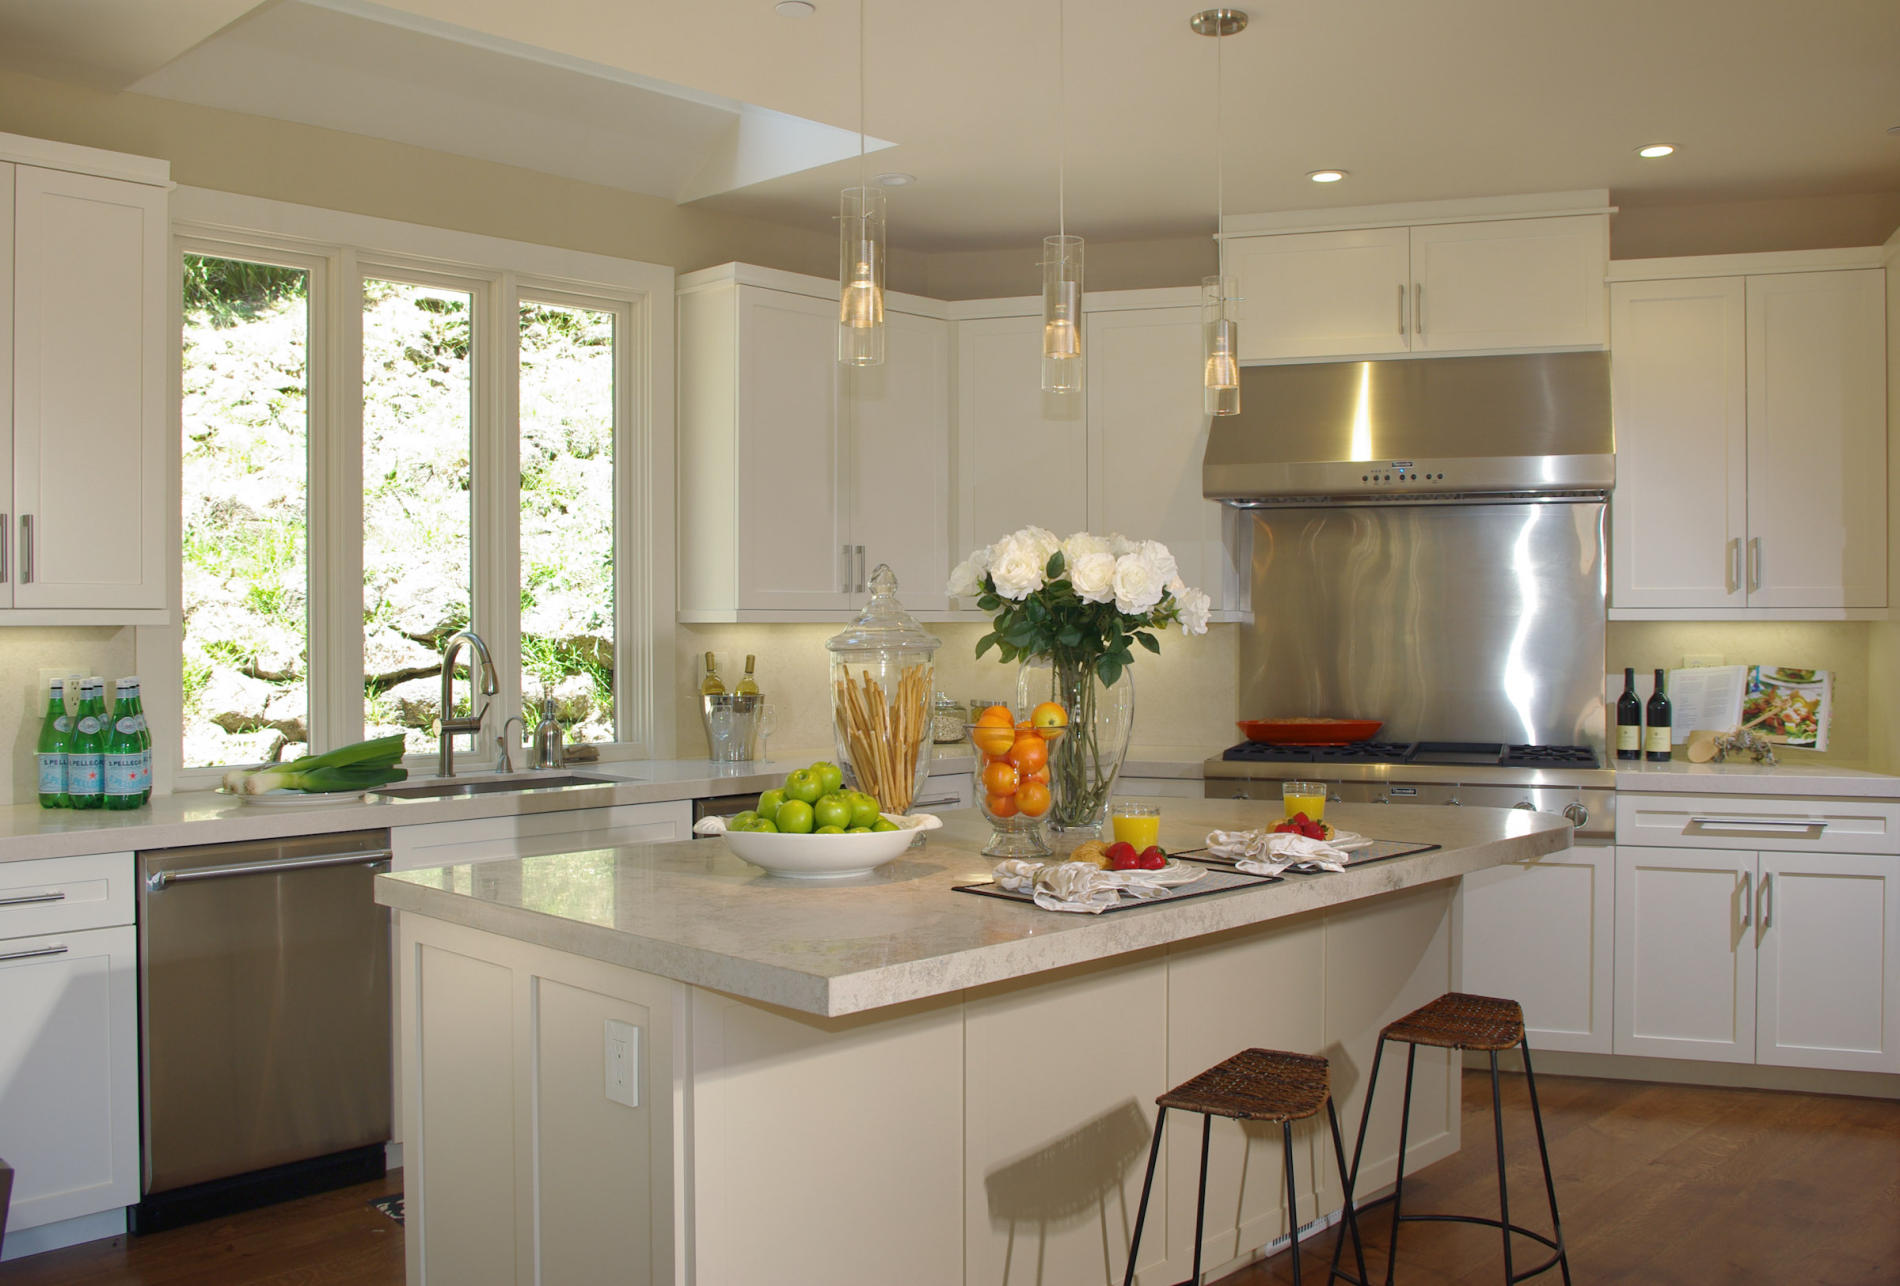 kitchen-design-light-modern-renovation-great-with-photos-of-kitchen-design-model-new-on-gallery.jpg